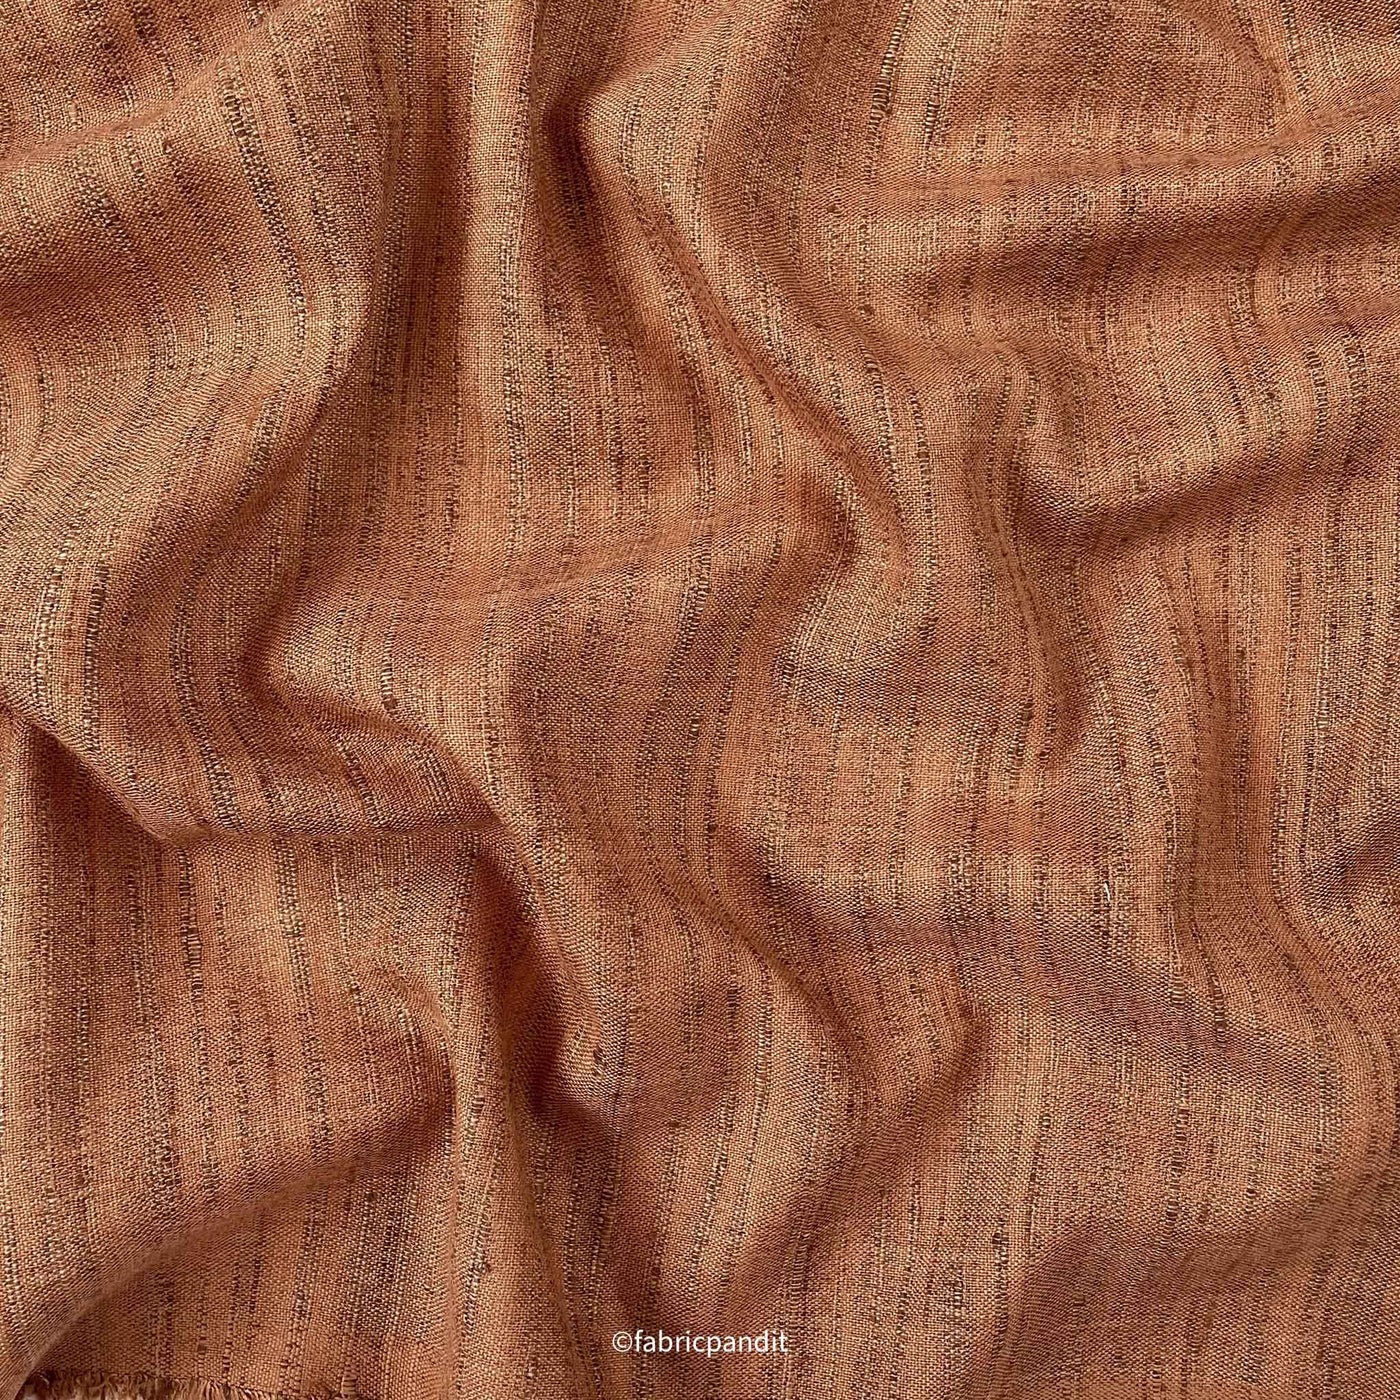 Fabric Pandit Fabric Dusty Ocher Color Bhagalpuri Woven Cotton Slub Kurta Fabric (Width 58 Inches)